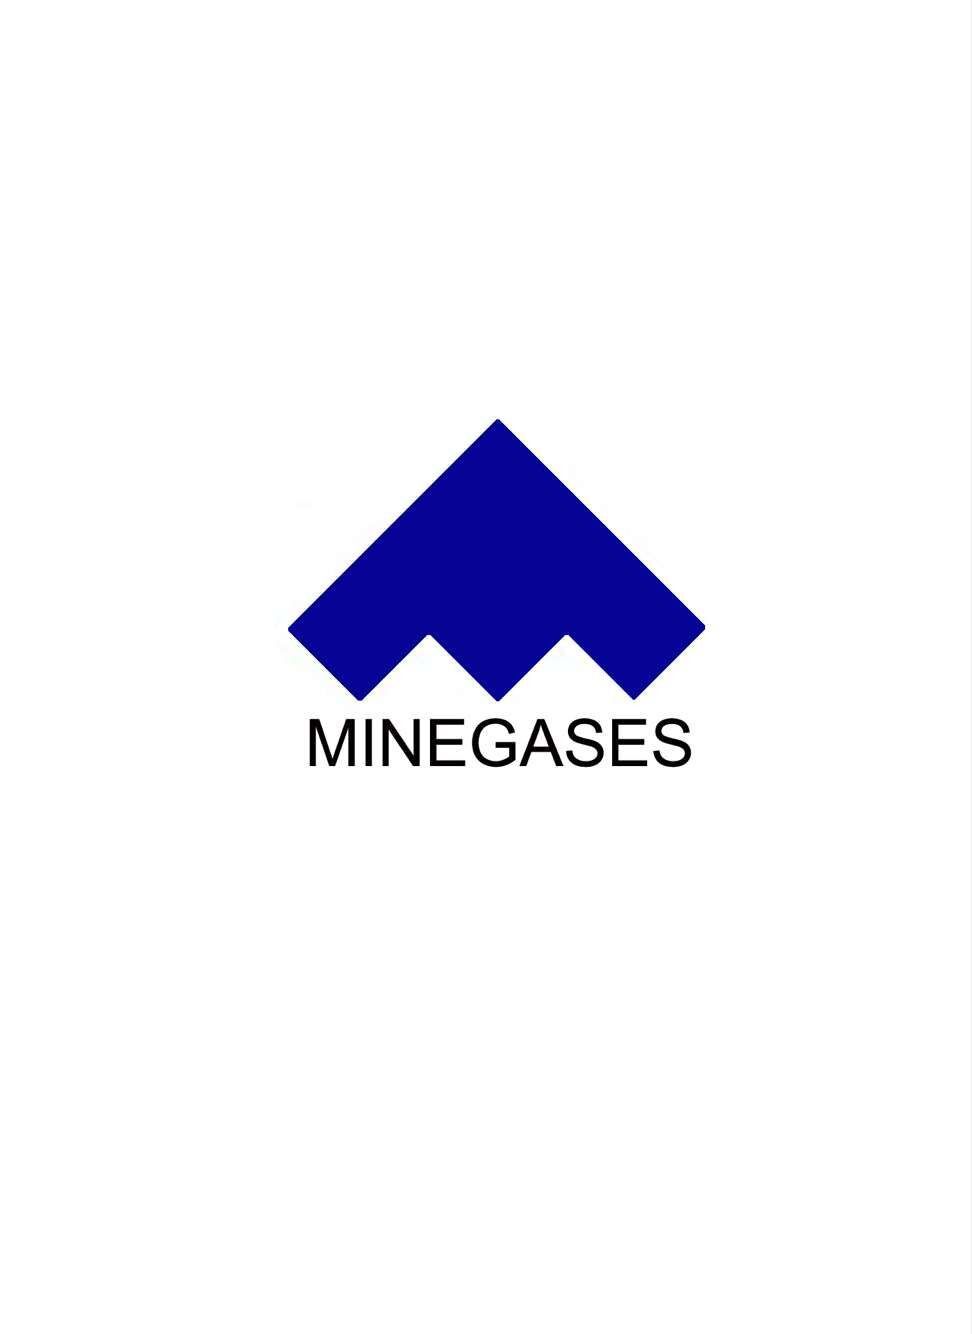 Minegases Company Limited